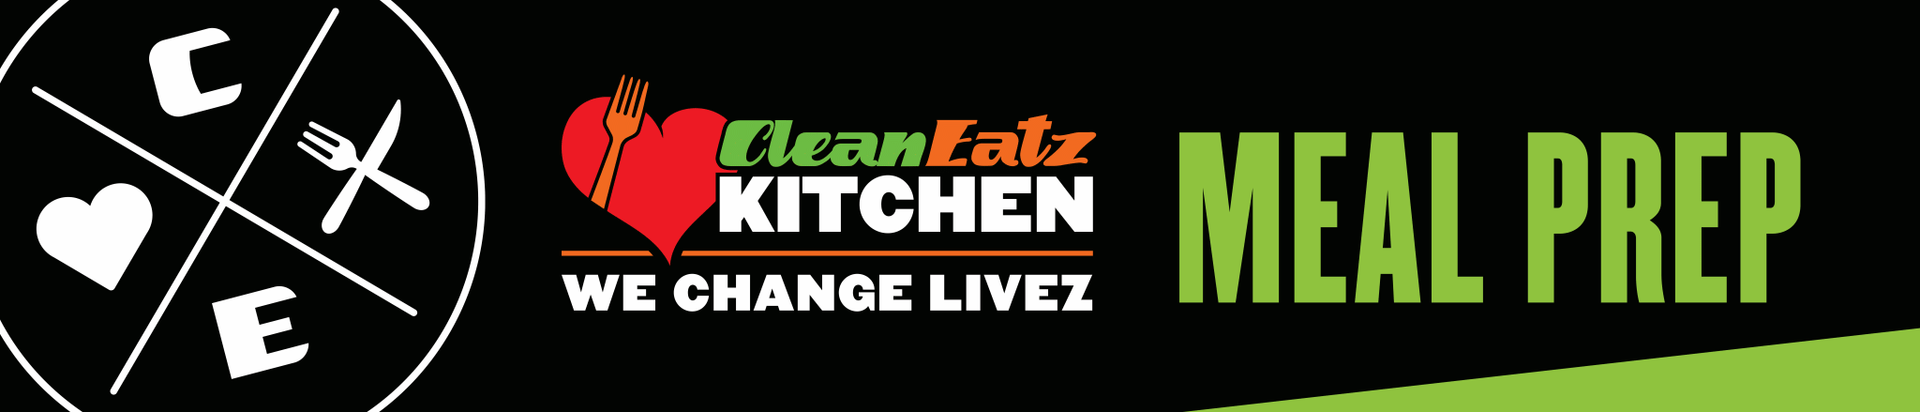 Wholesale Marketing Materials - Clean Eatz Kitchen